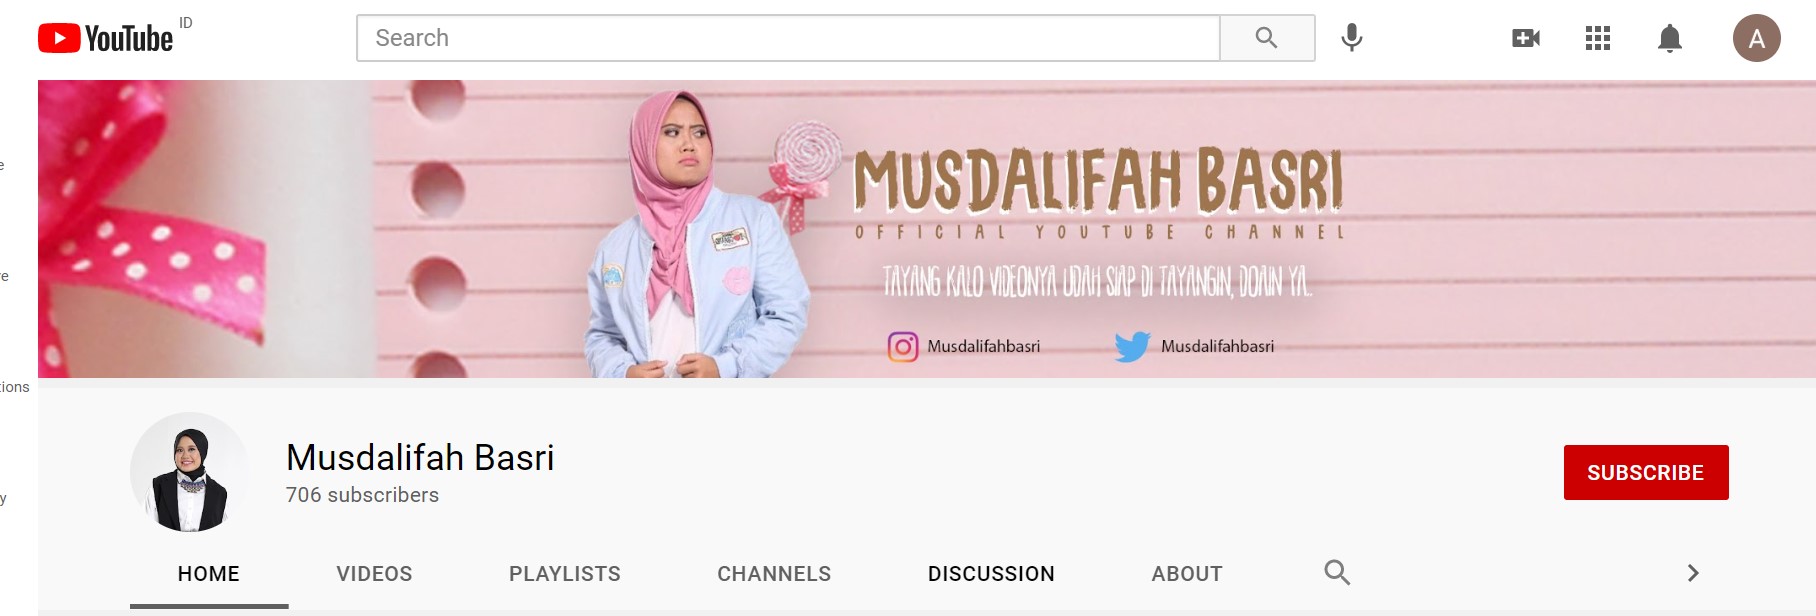 YouTube Musdalifah